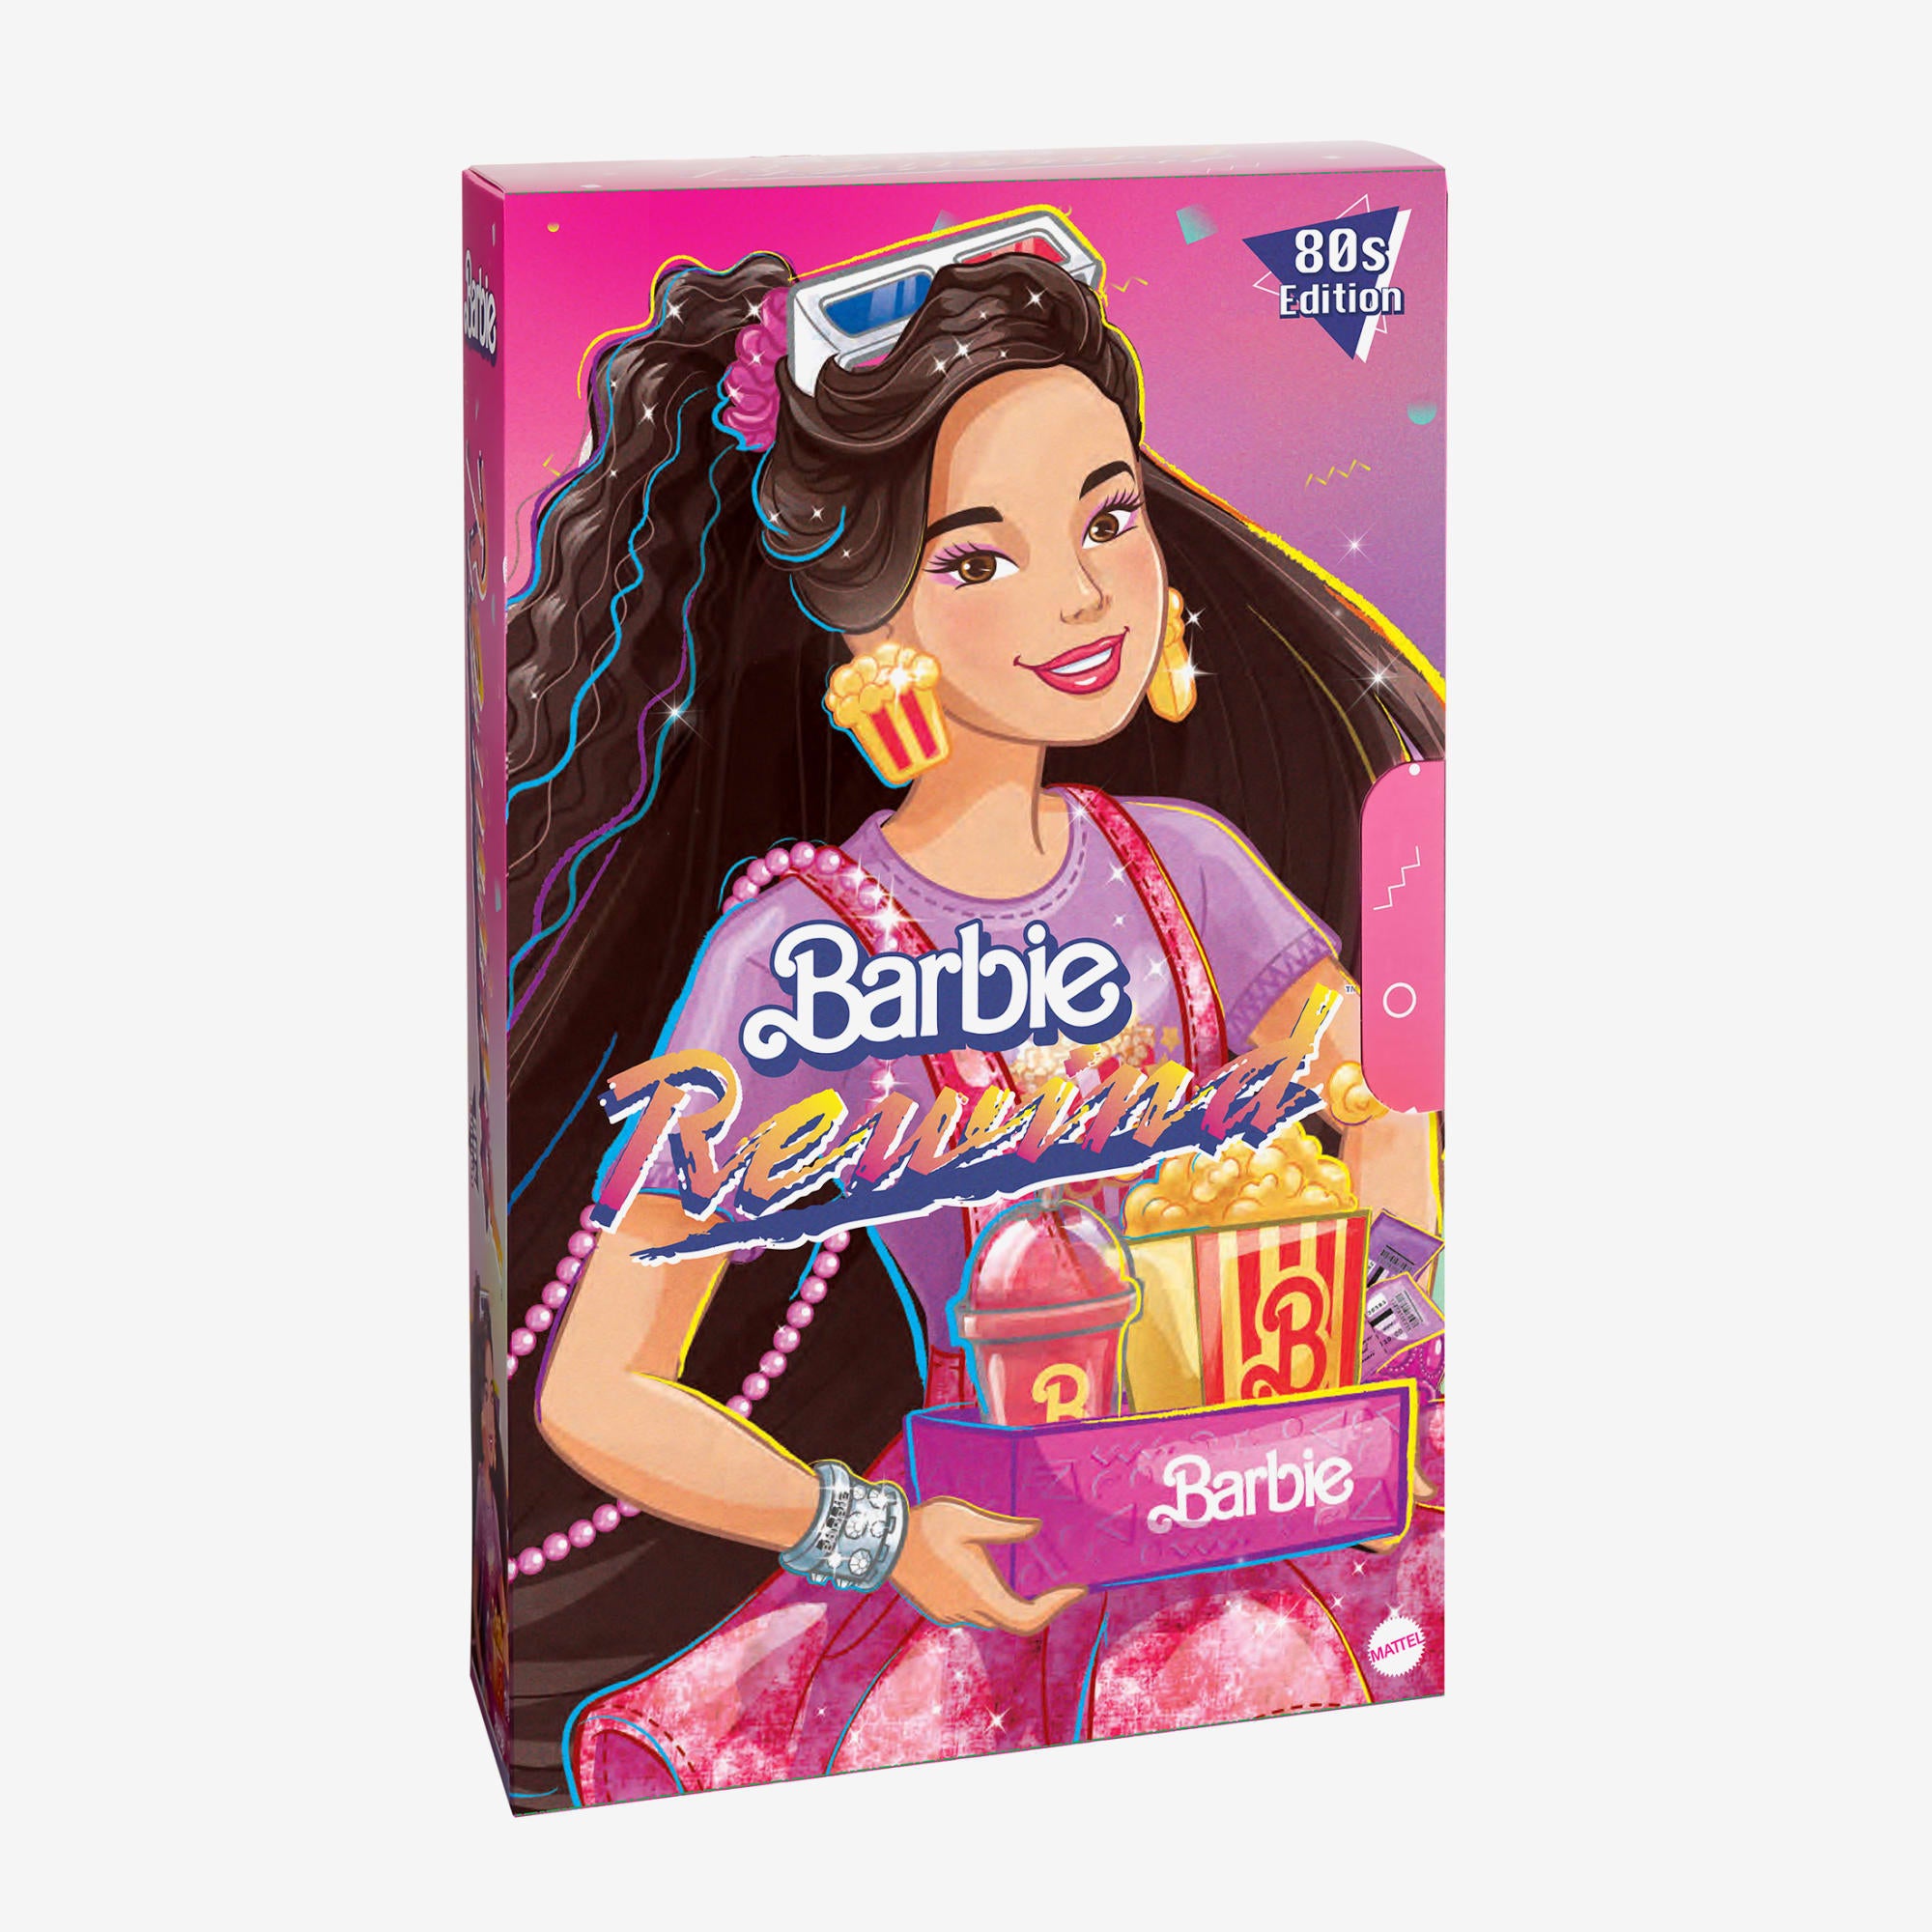 Barbie Rewind Doll – Movie Night